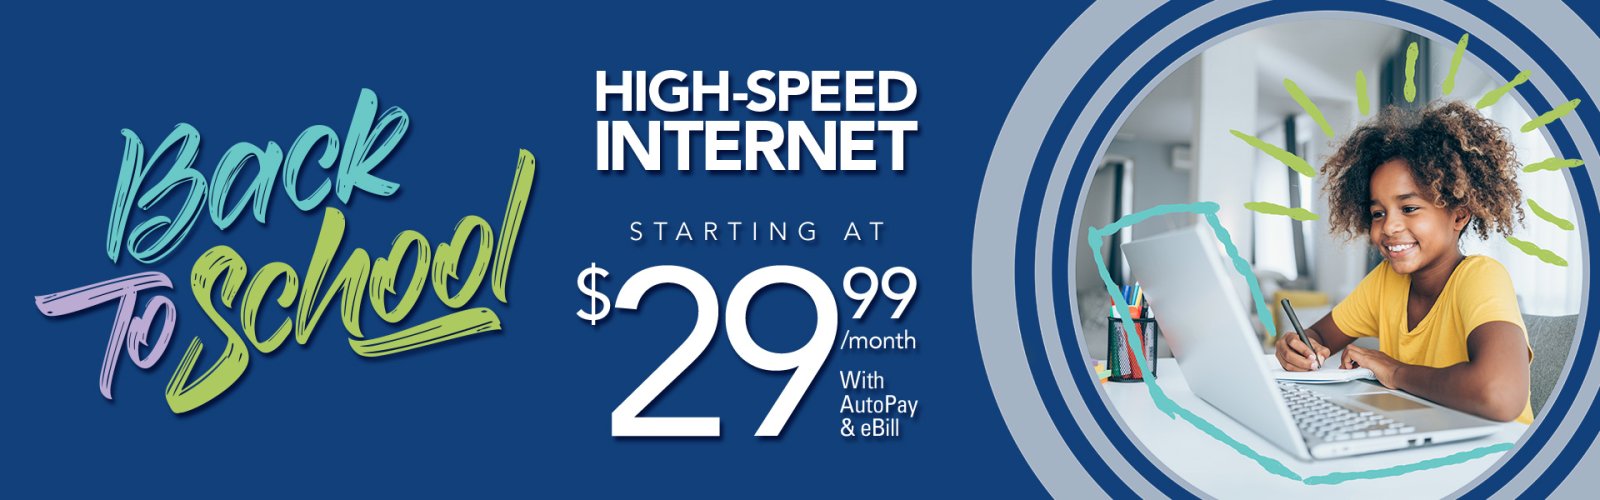 student internet deals, back to school, internet package, cheap internet